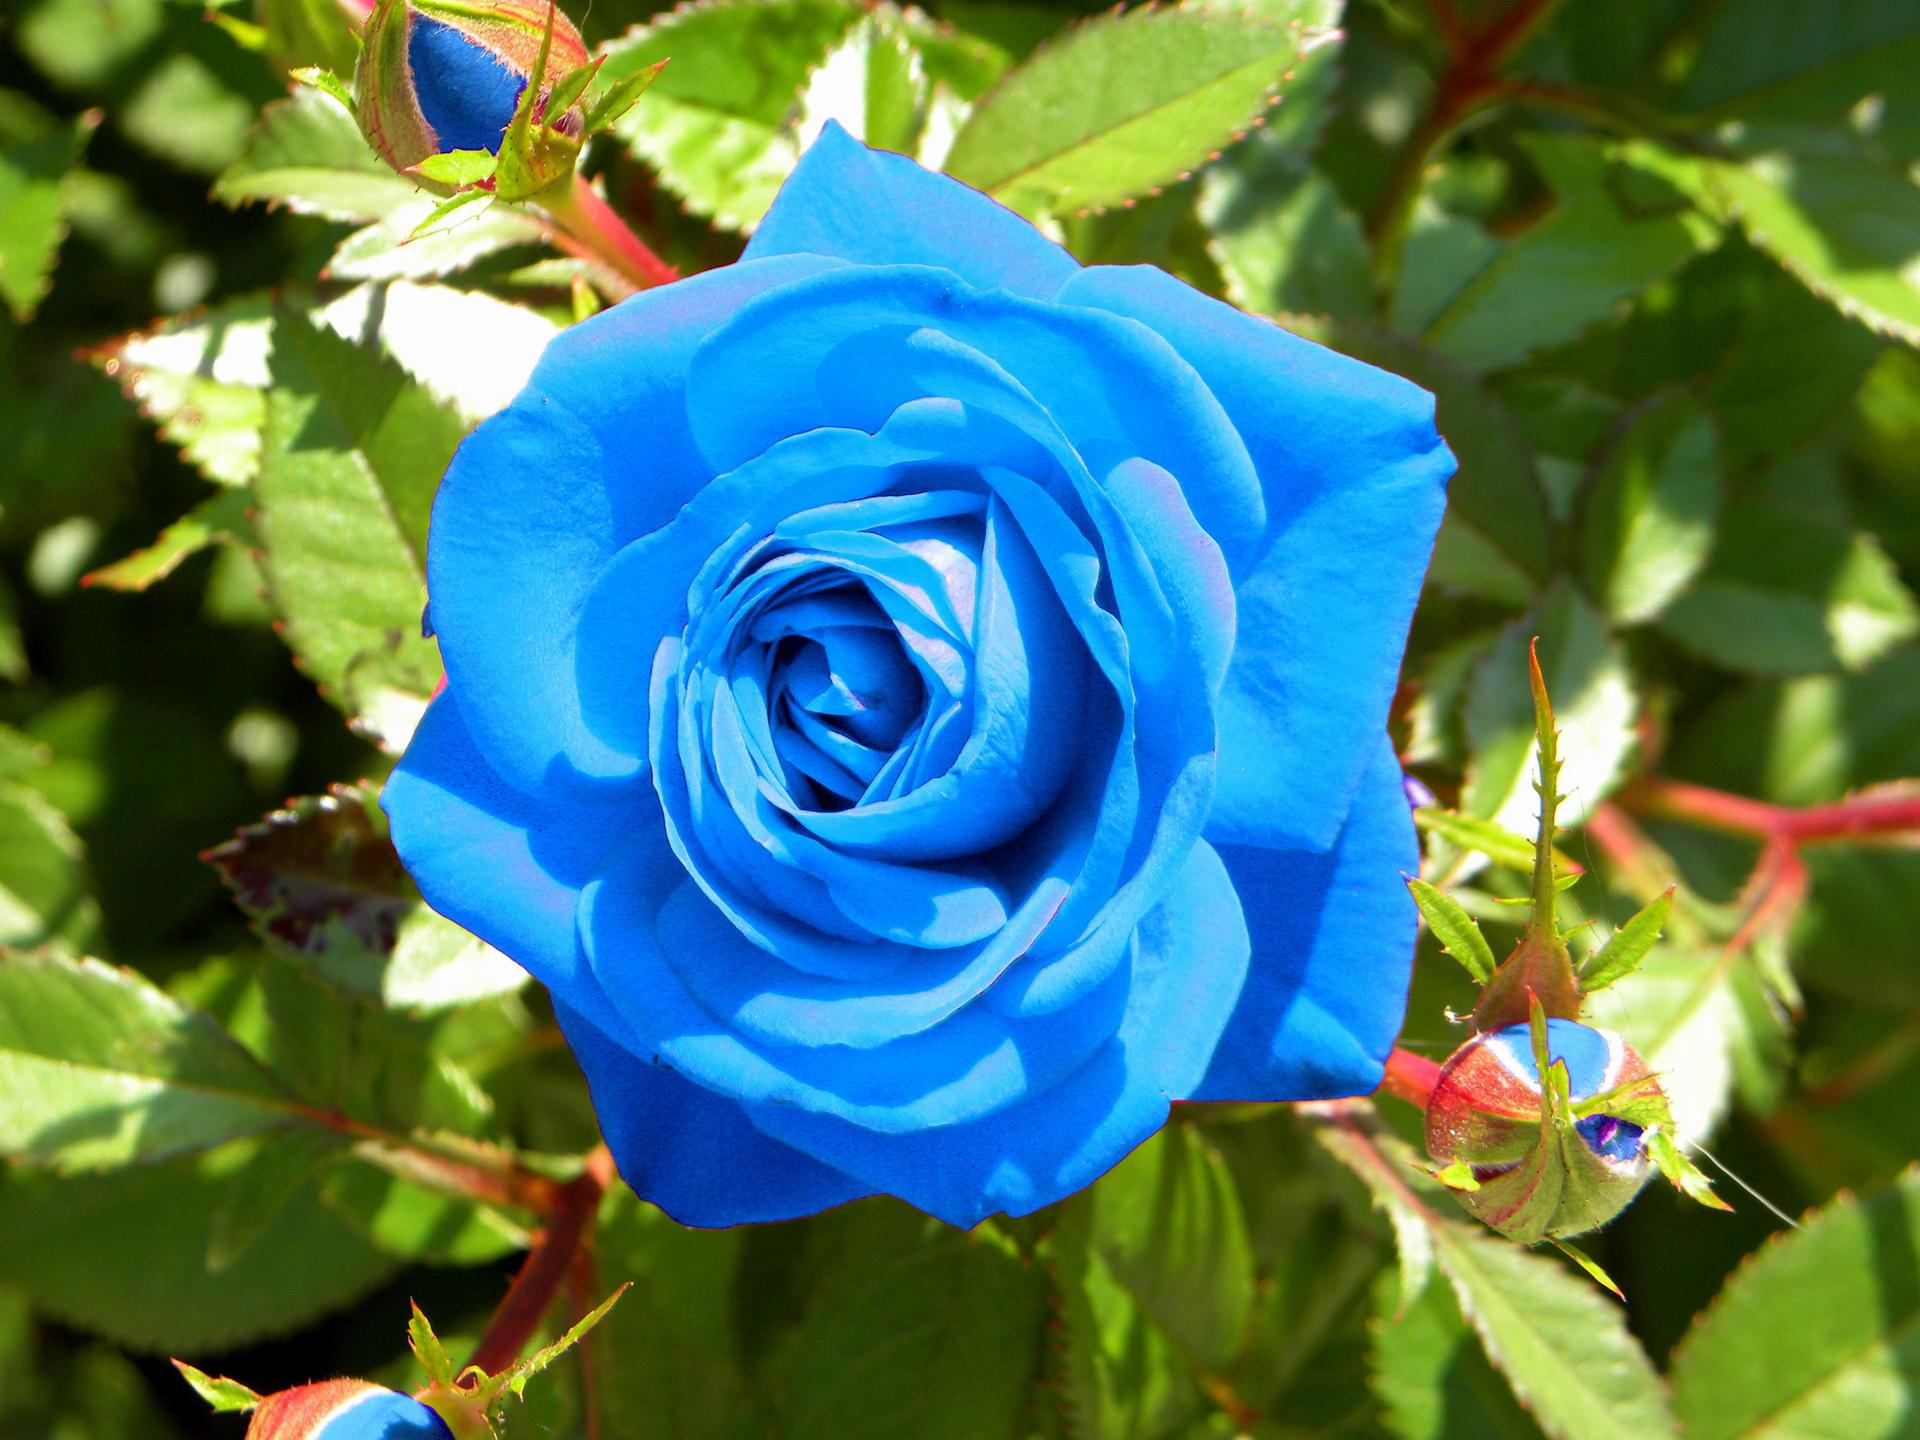 tapete de rosas,blume,rose,blühende pflanze,blau,pflanze